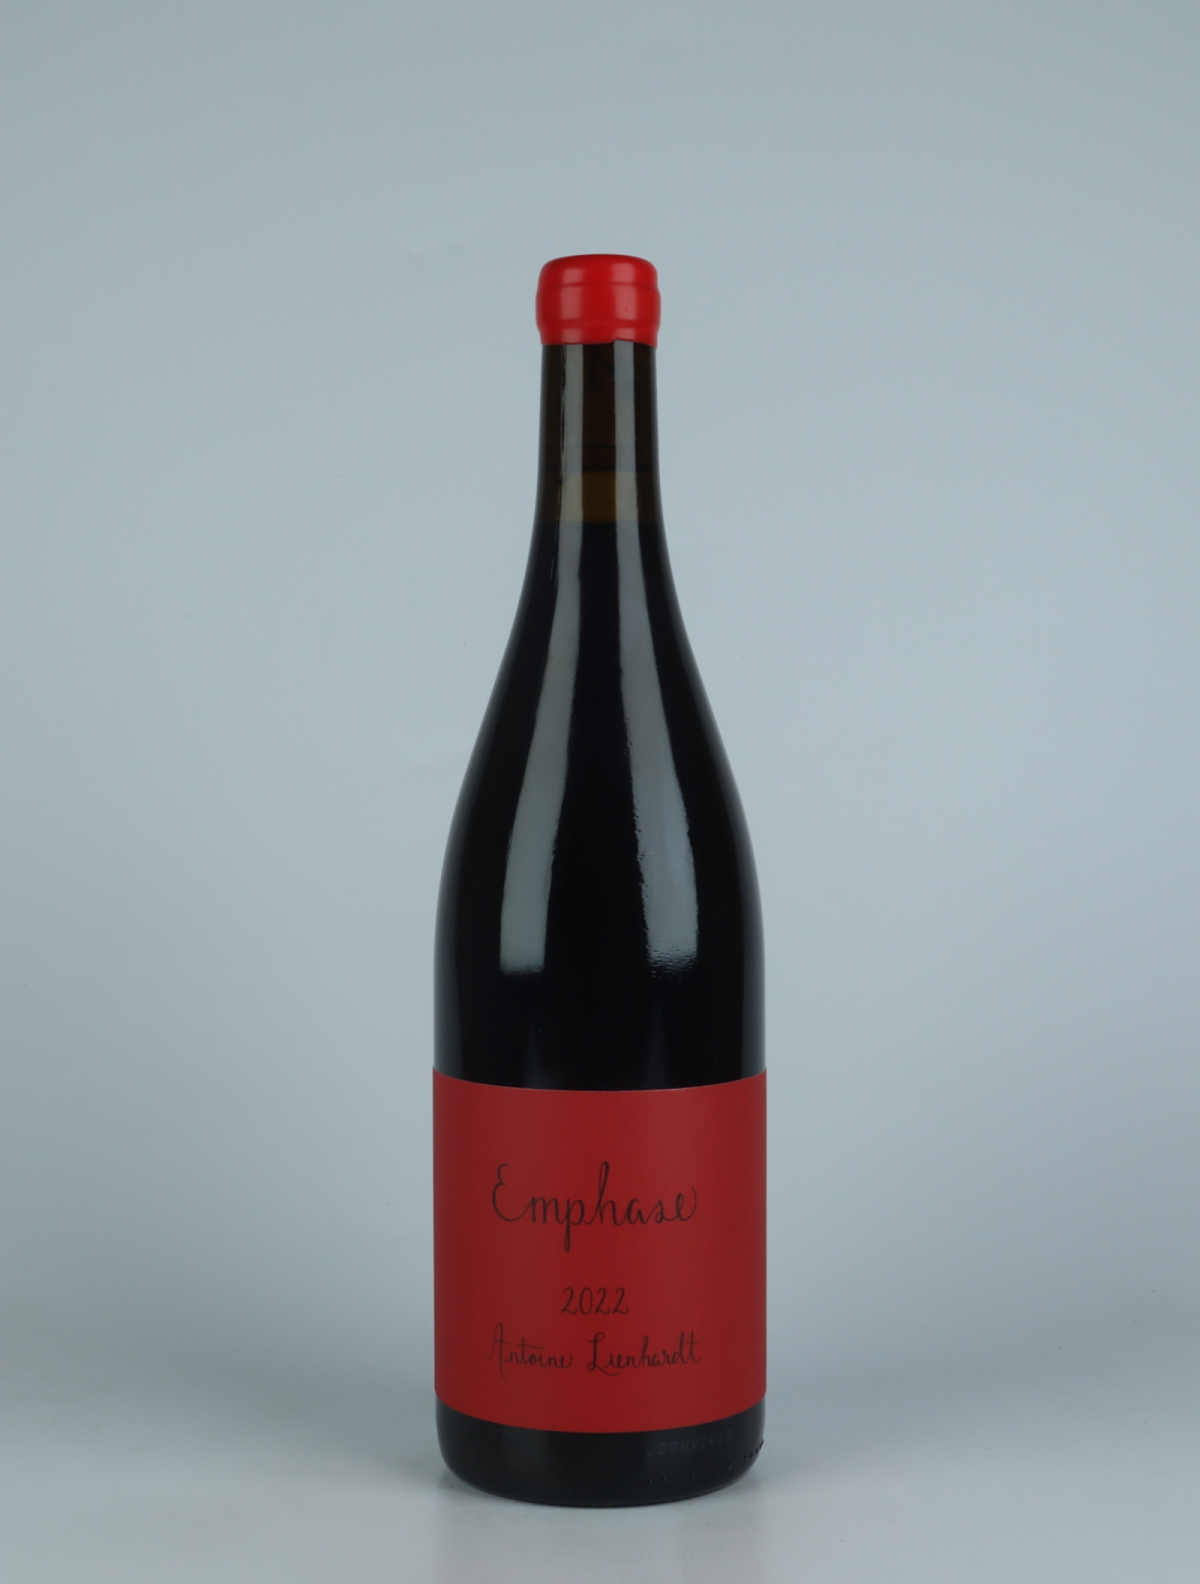 A bottle 2022 Côte de Nuits Villages - Emphase Red wine from Antoine Lienhardt, Burgundy in France